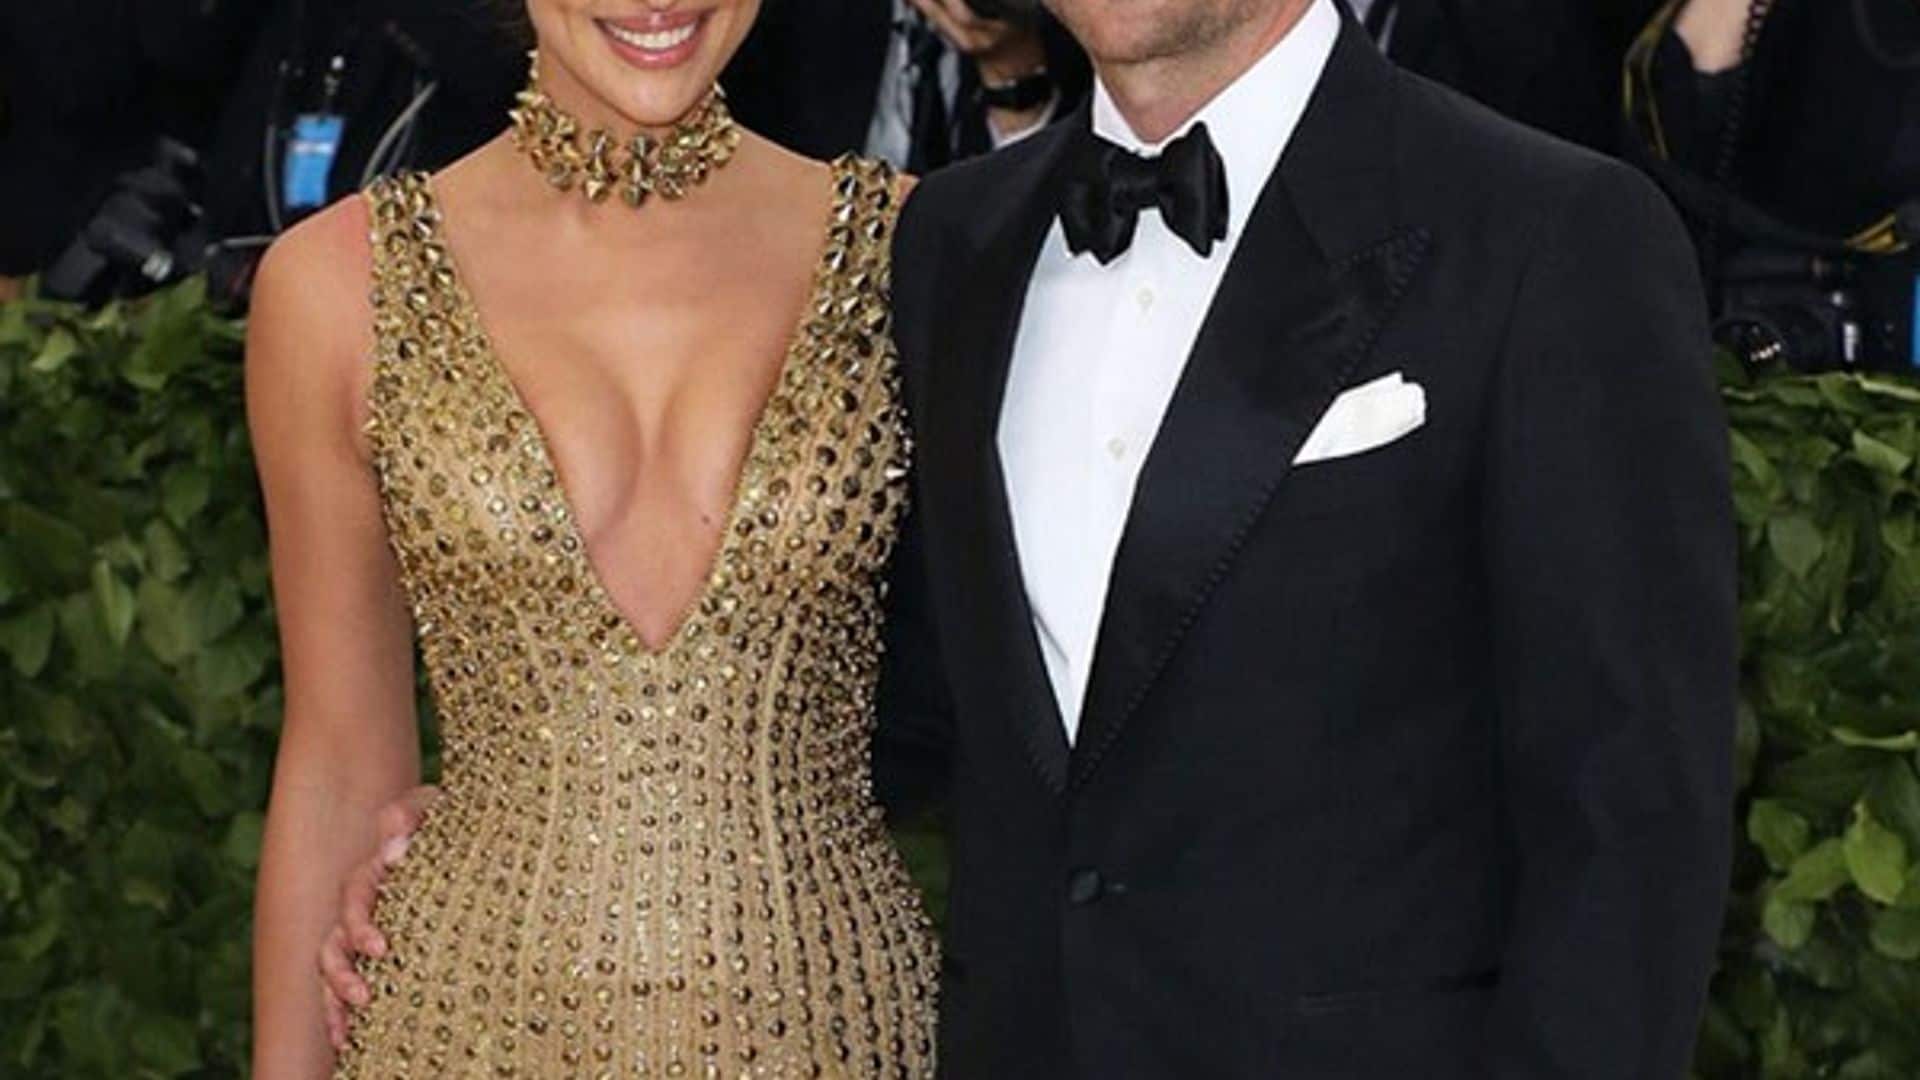 Confirmed: Bradley Cooper and Irina Shayk split after 4 years